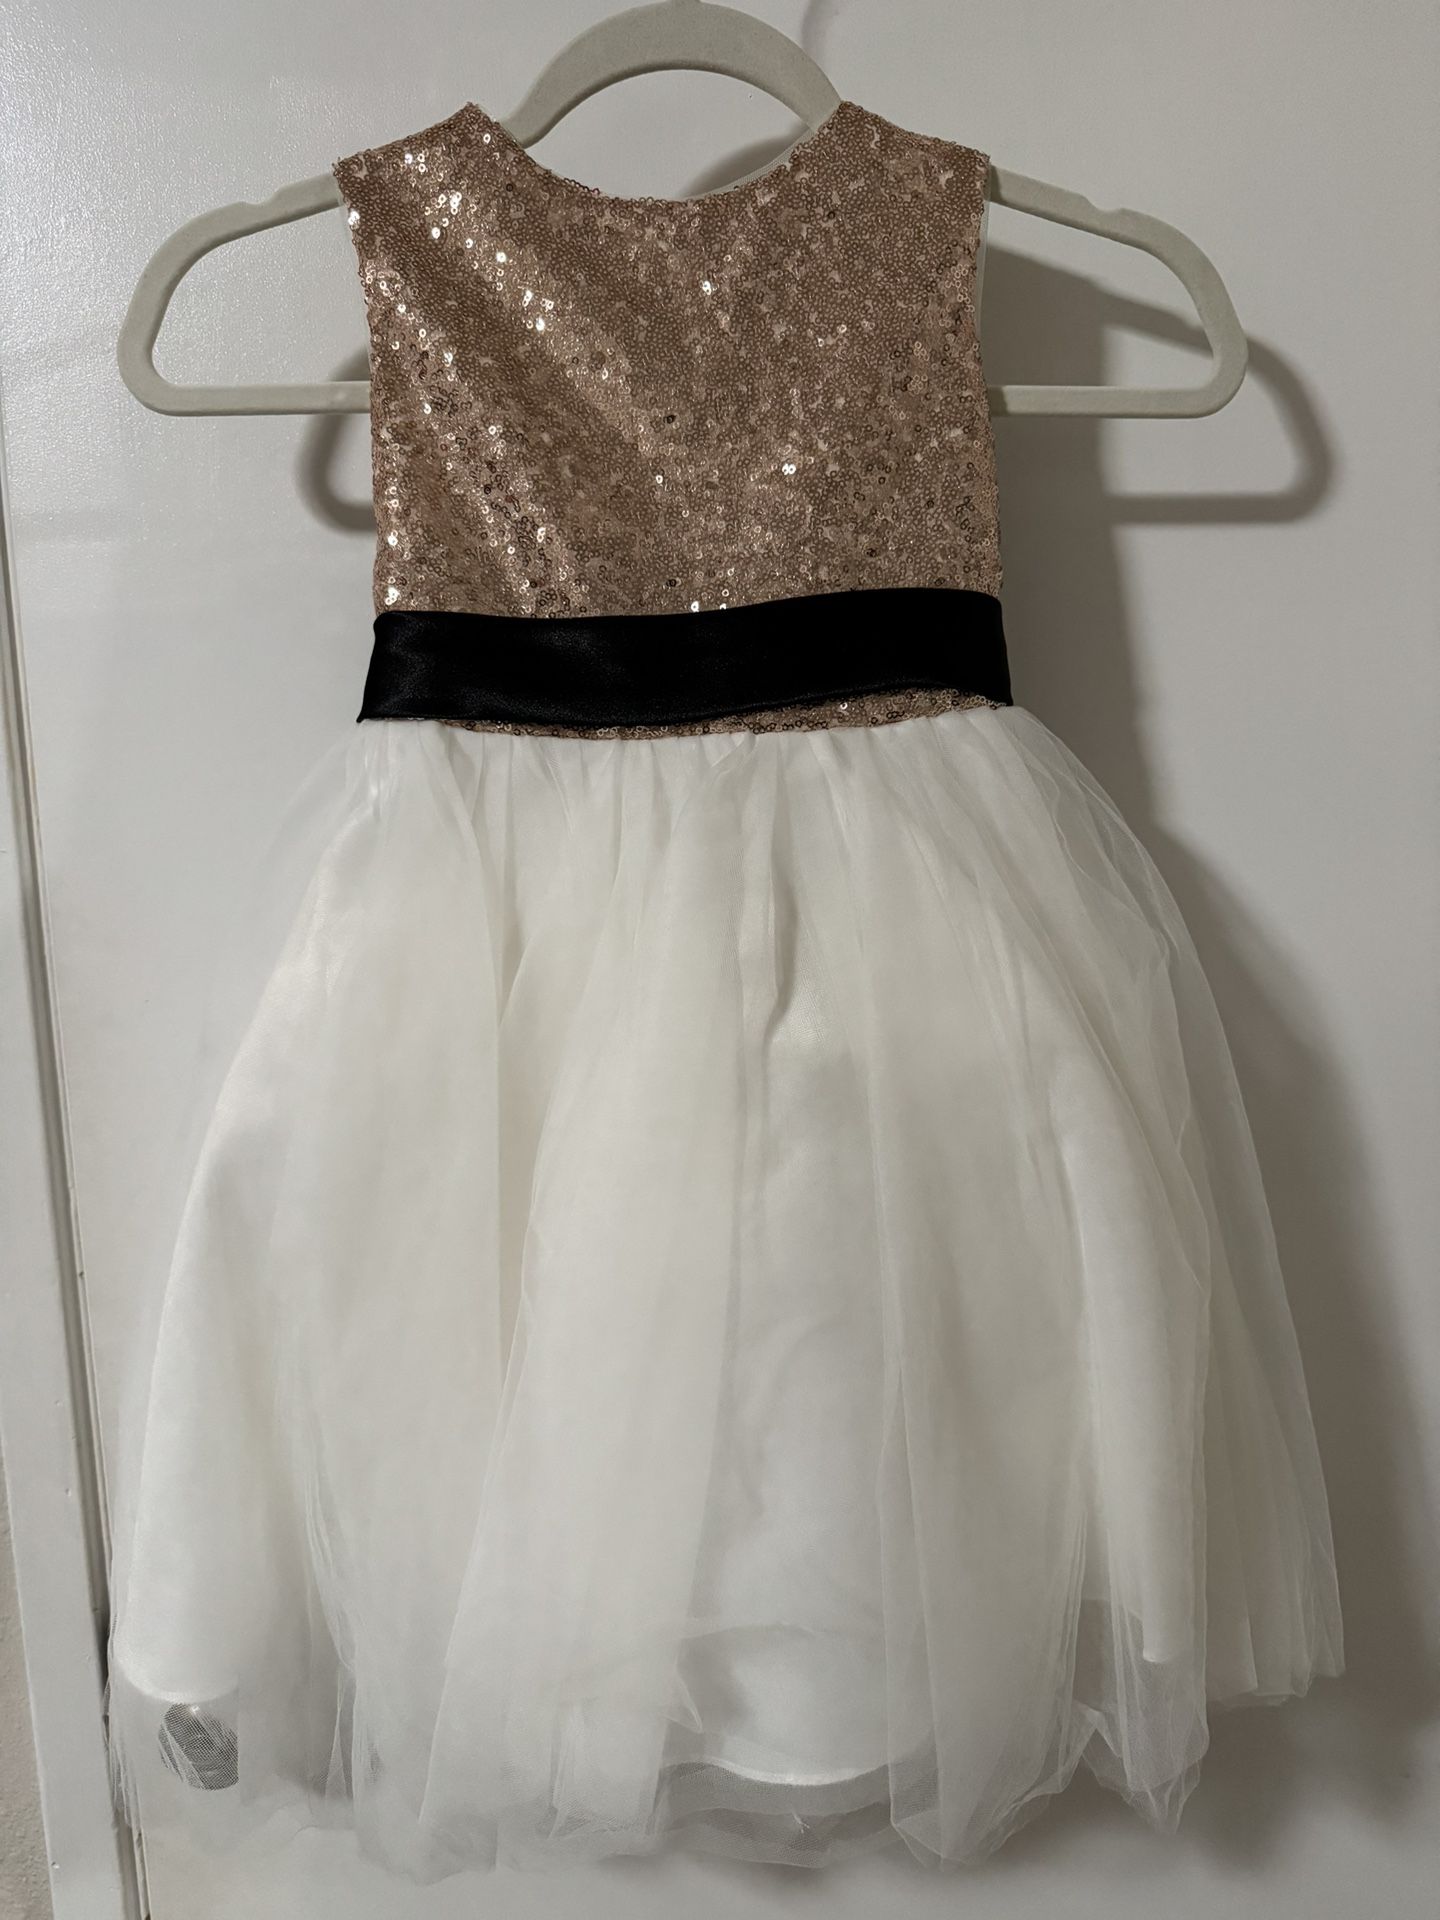 Baby Flower Girl Rose Gold Sequin & White Tutu Dress With Black Bow